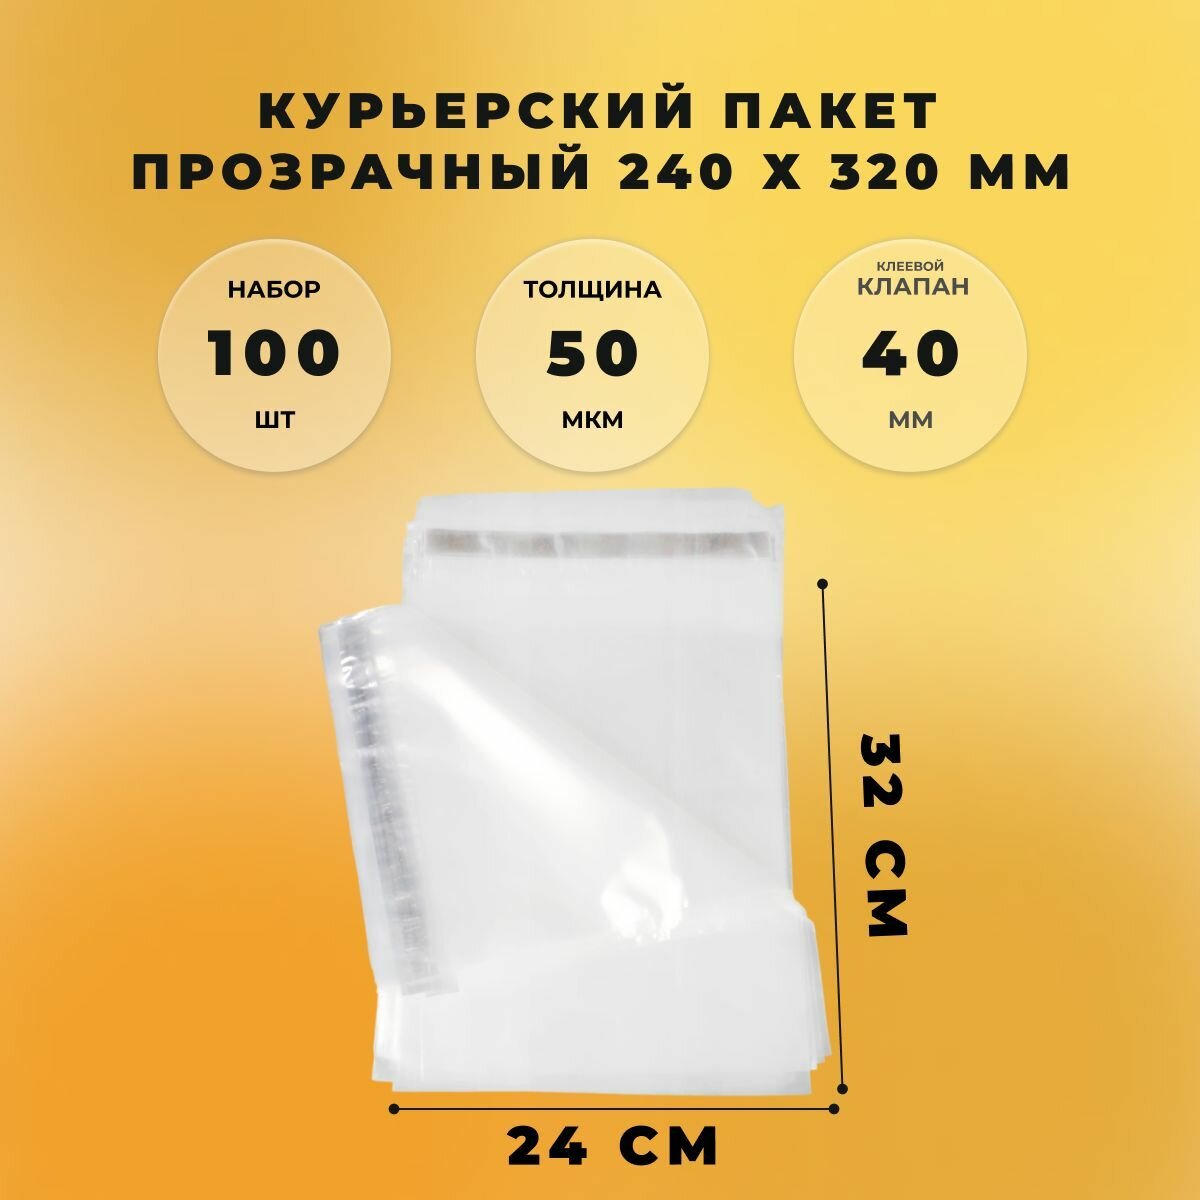 Курьерский пакет 240 х 320 + 40 мм (50 микрон) прозрачный СтандартПАК упаковка 100 шт